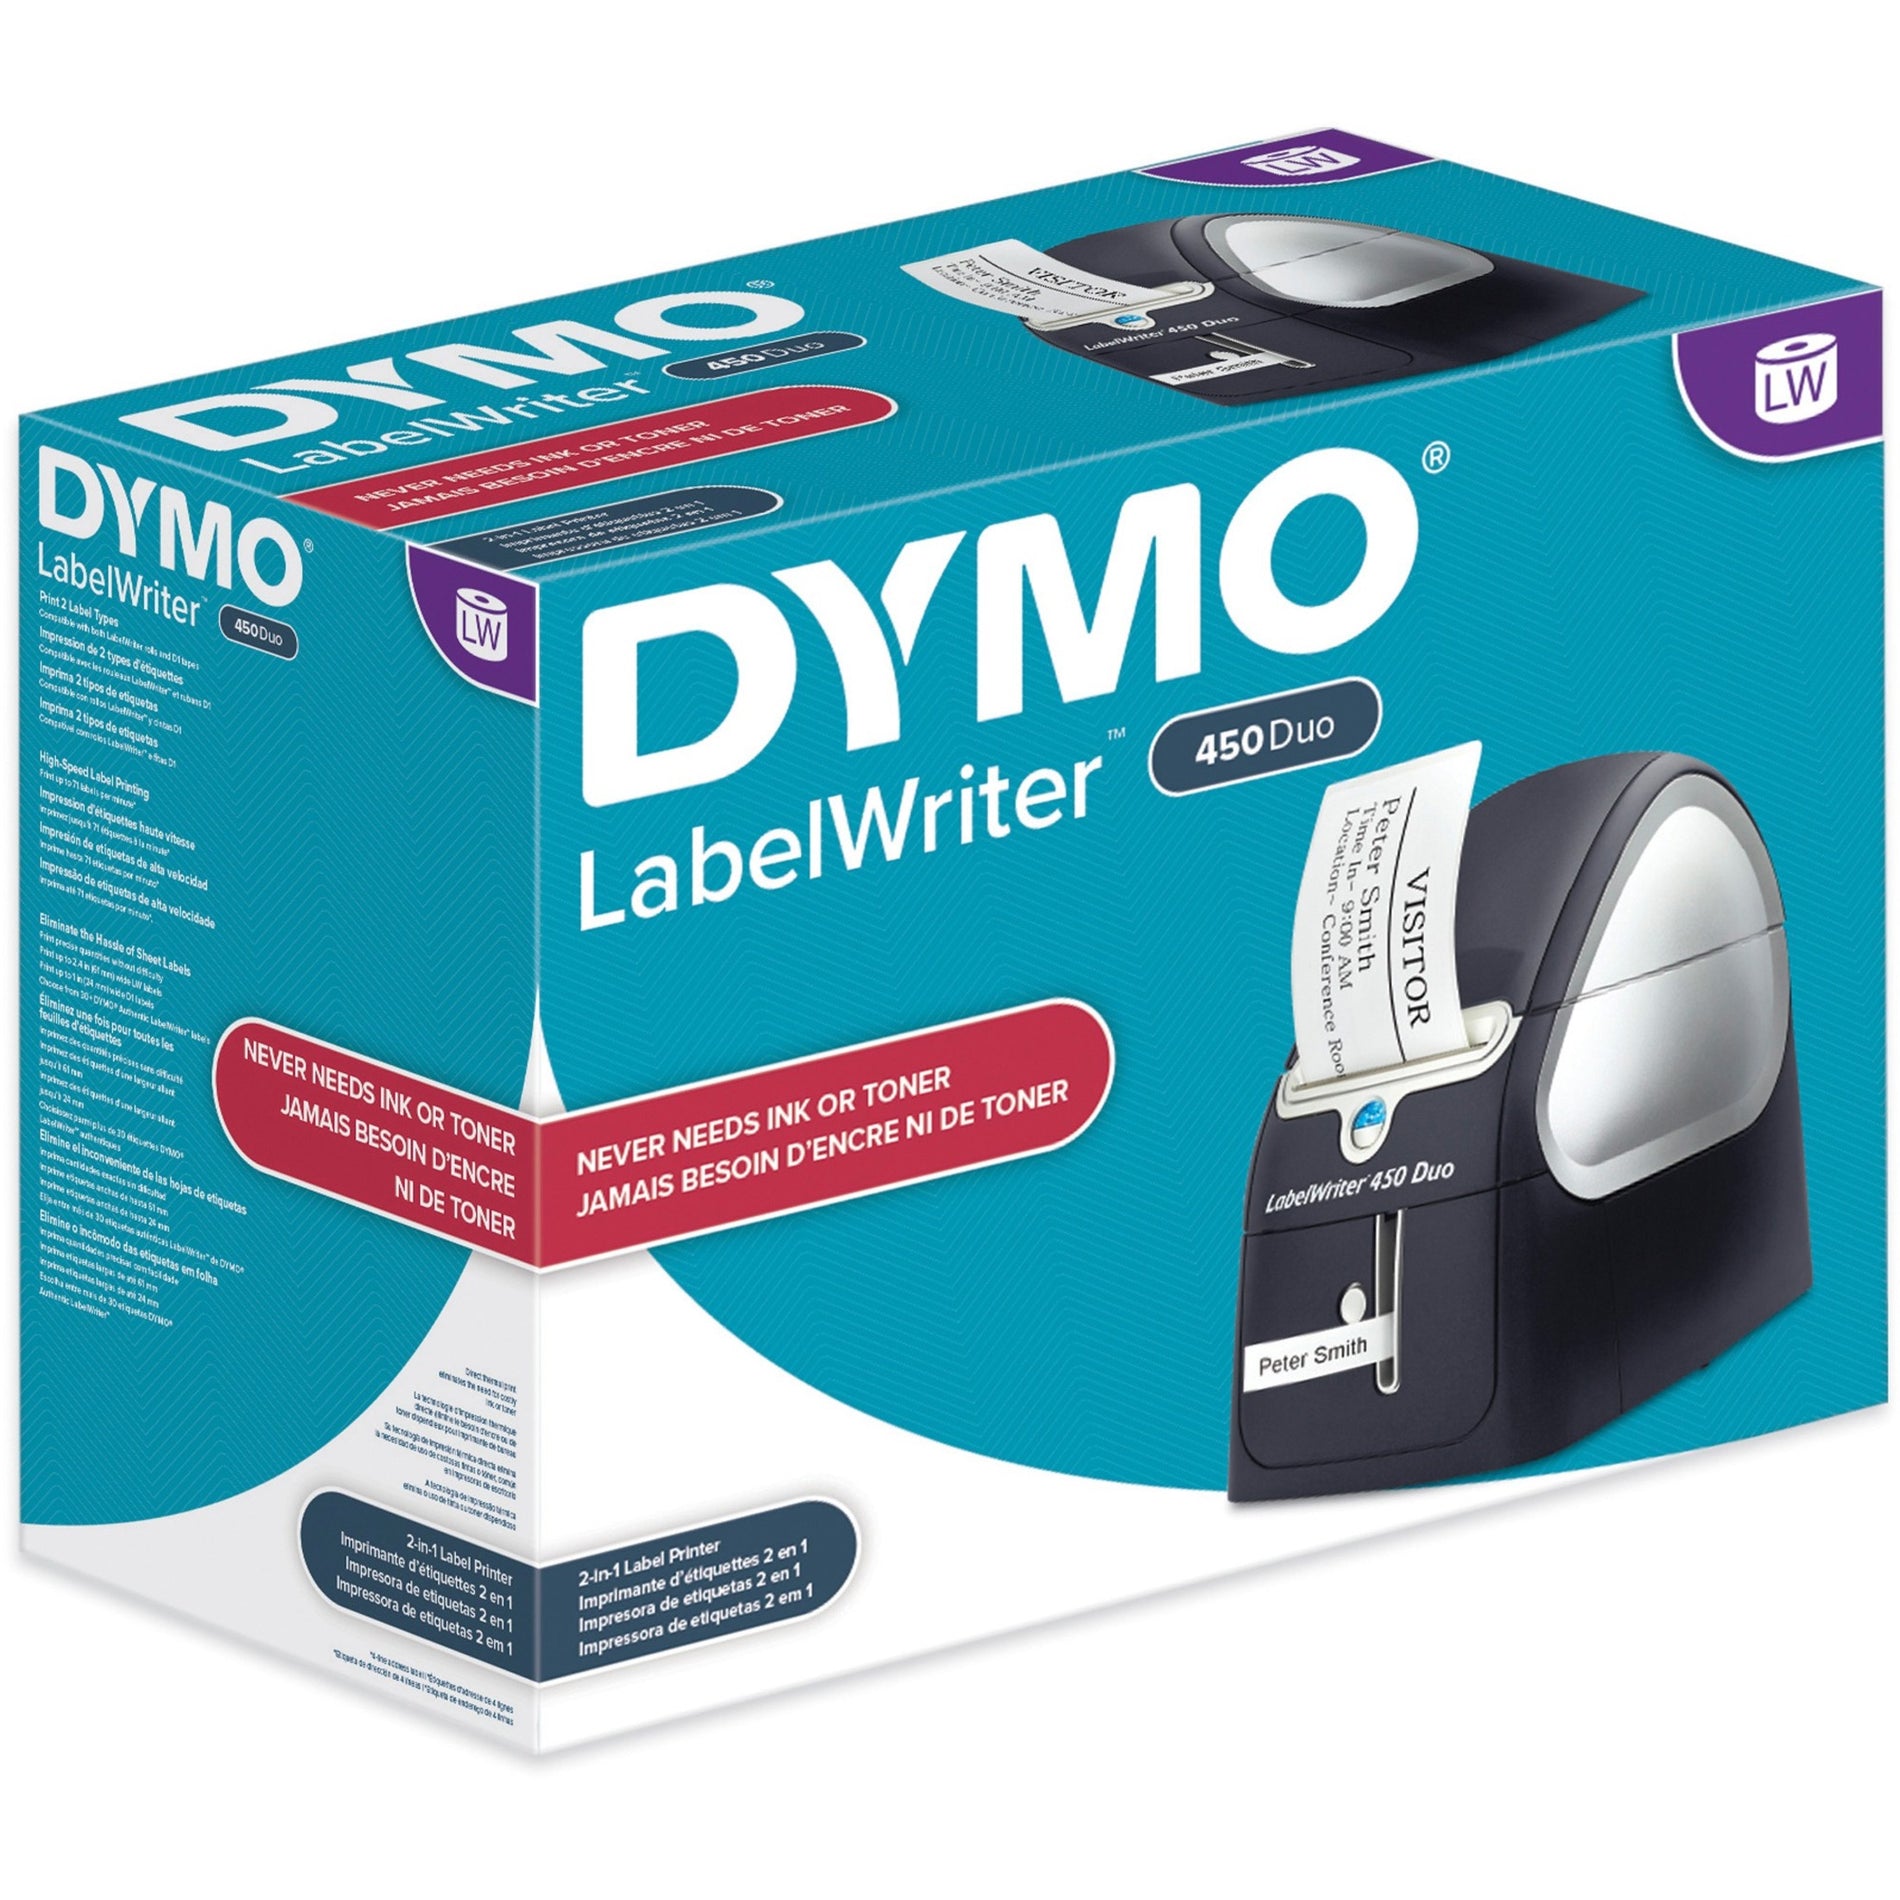 Dymo 1752267 LabelWriter 450 Duo Label Printer, USB Connectivity, 71 Labels Per Min., BK/PM